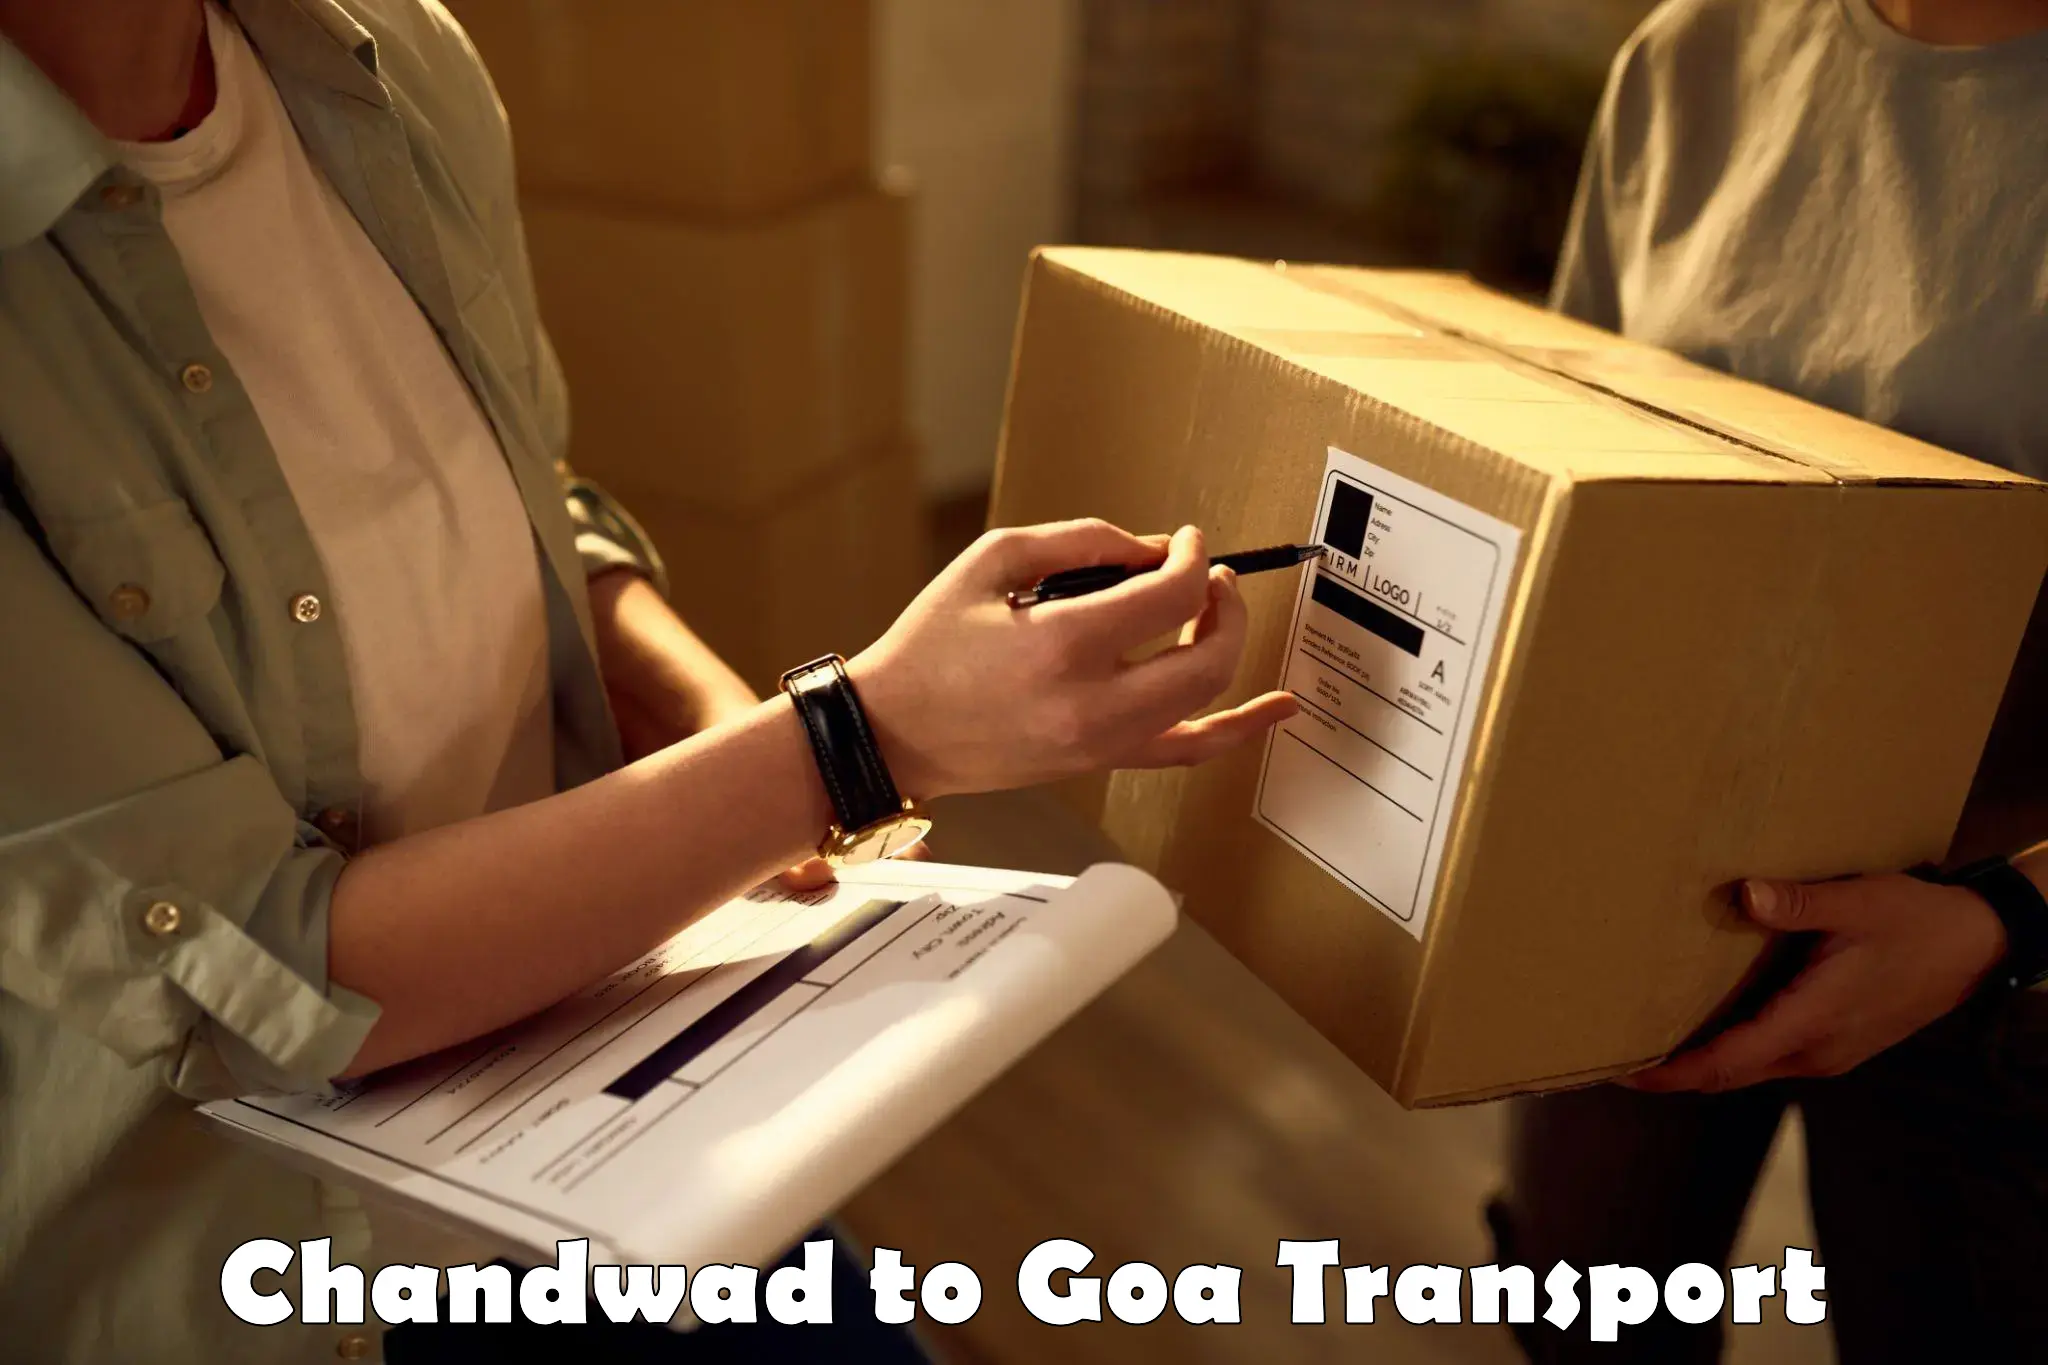 Transport in sharing Chandwad to IIT Goa